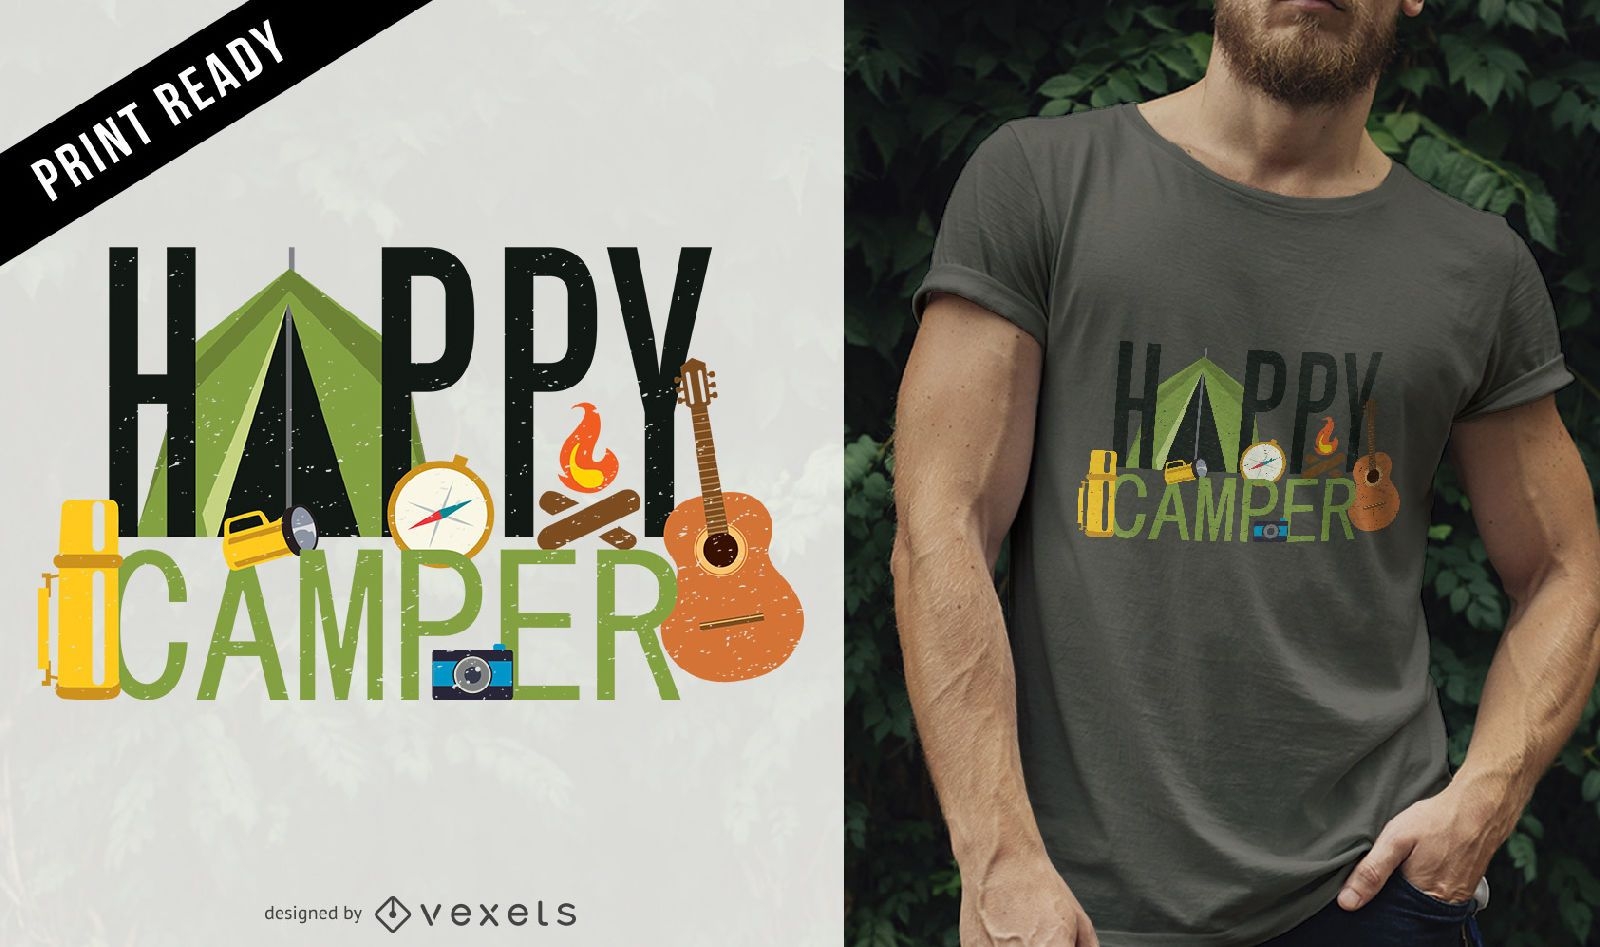 Happy camper t-shirt design